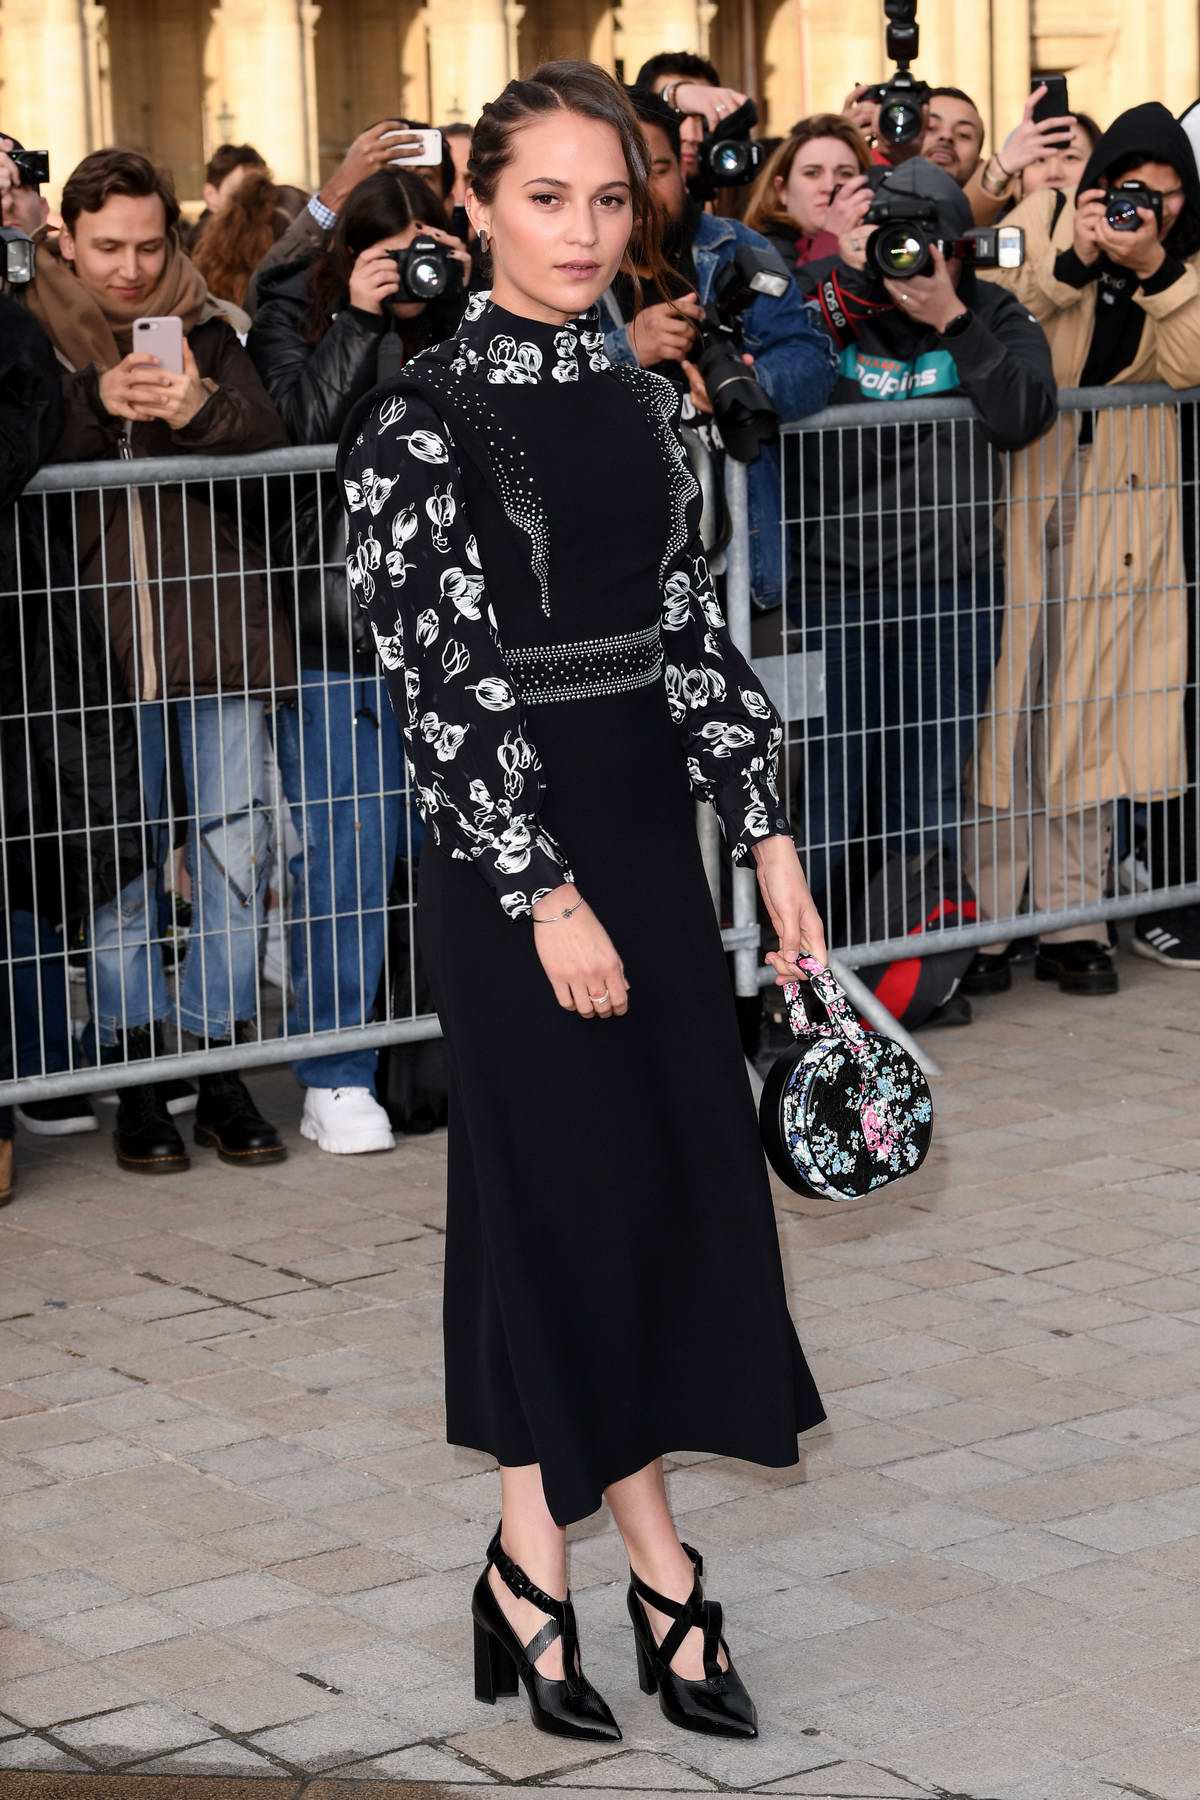 Alicia Vikander Louis Vuitton Fashion Show in Paris October 1, 2019 – Star  Style